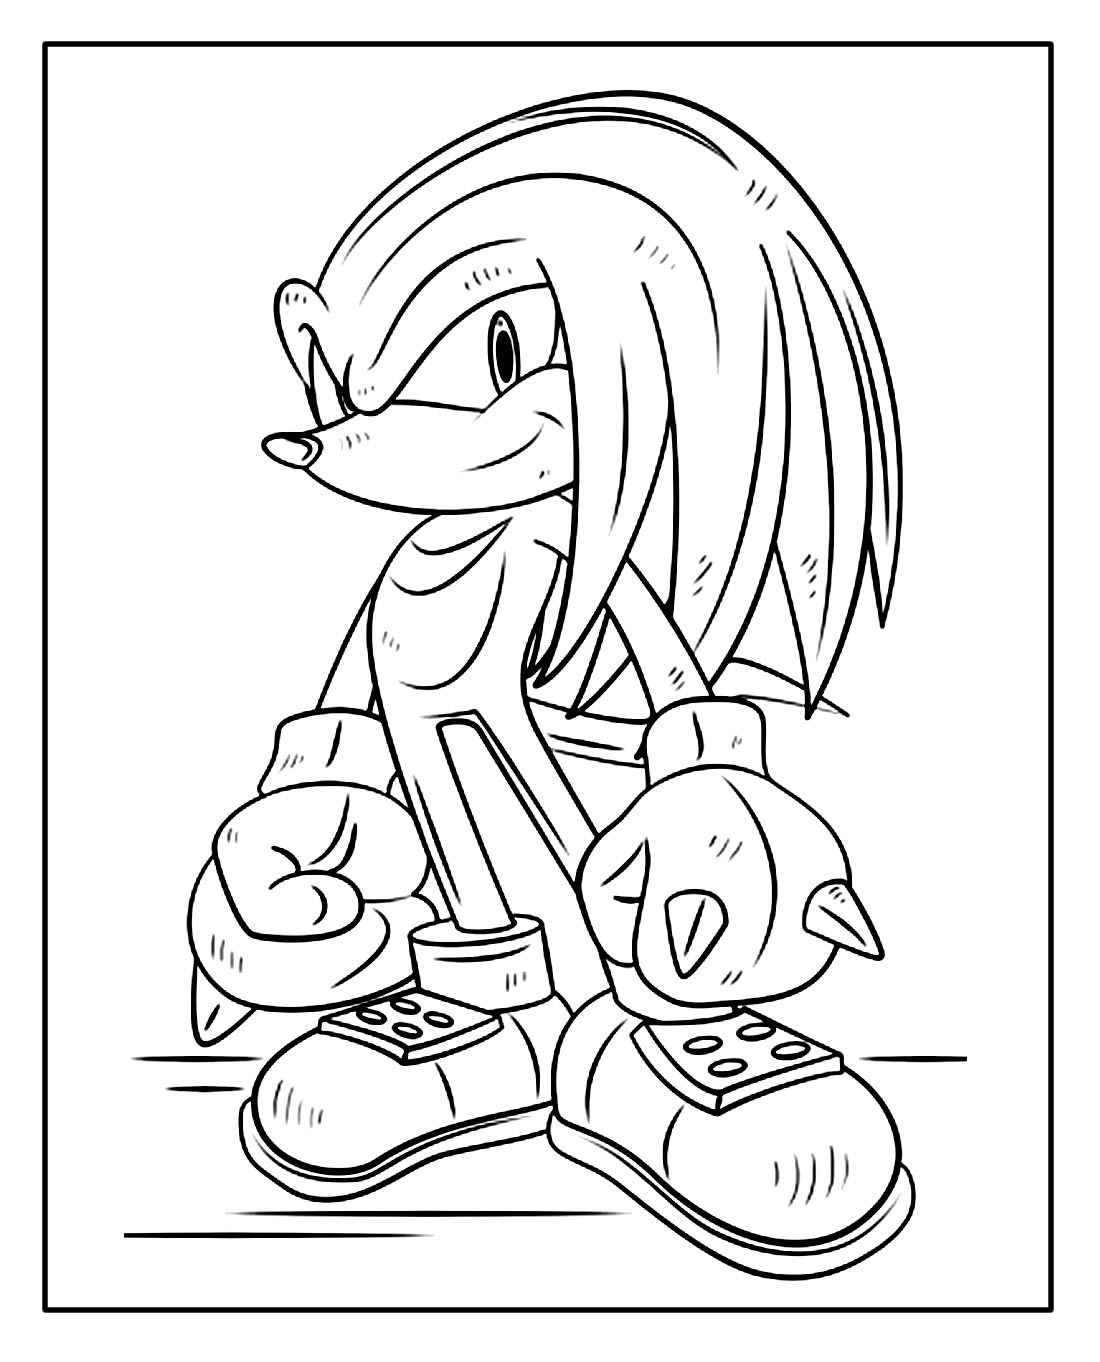 Página para pintar do Sonic